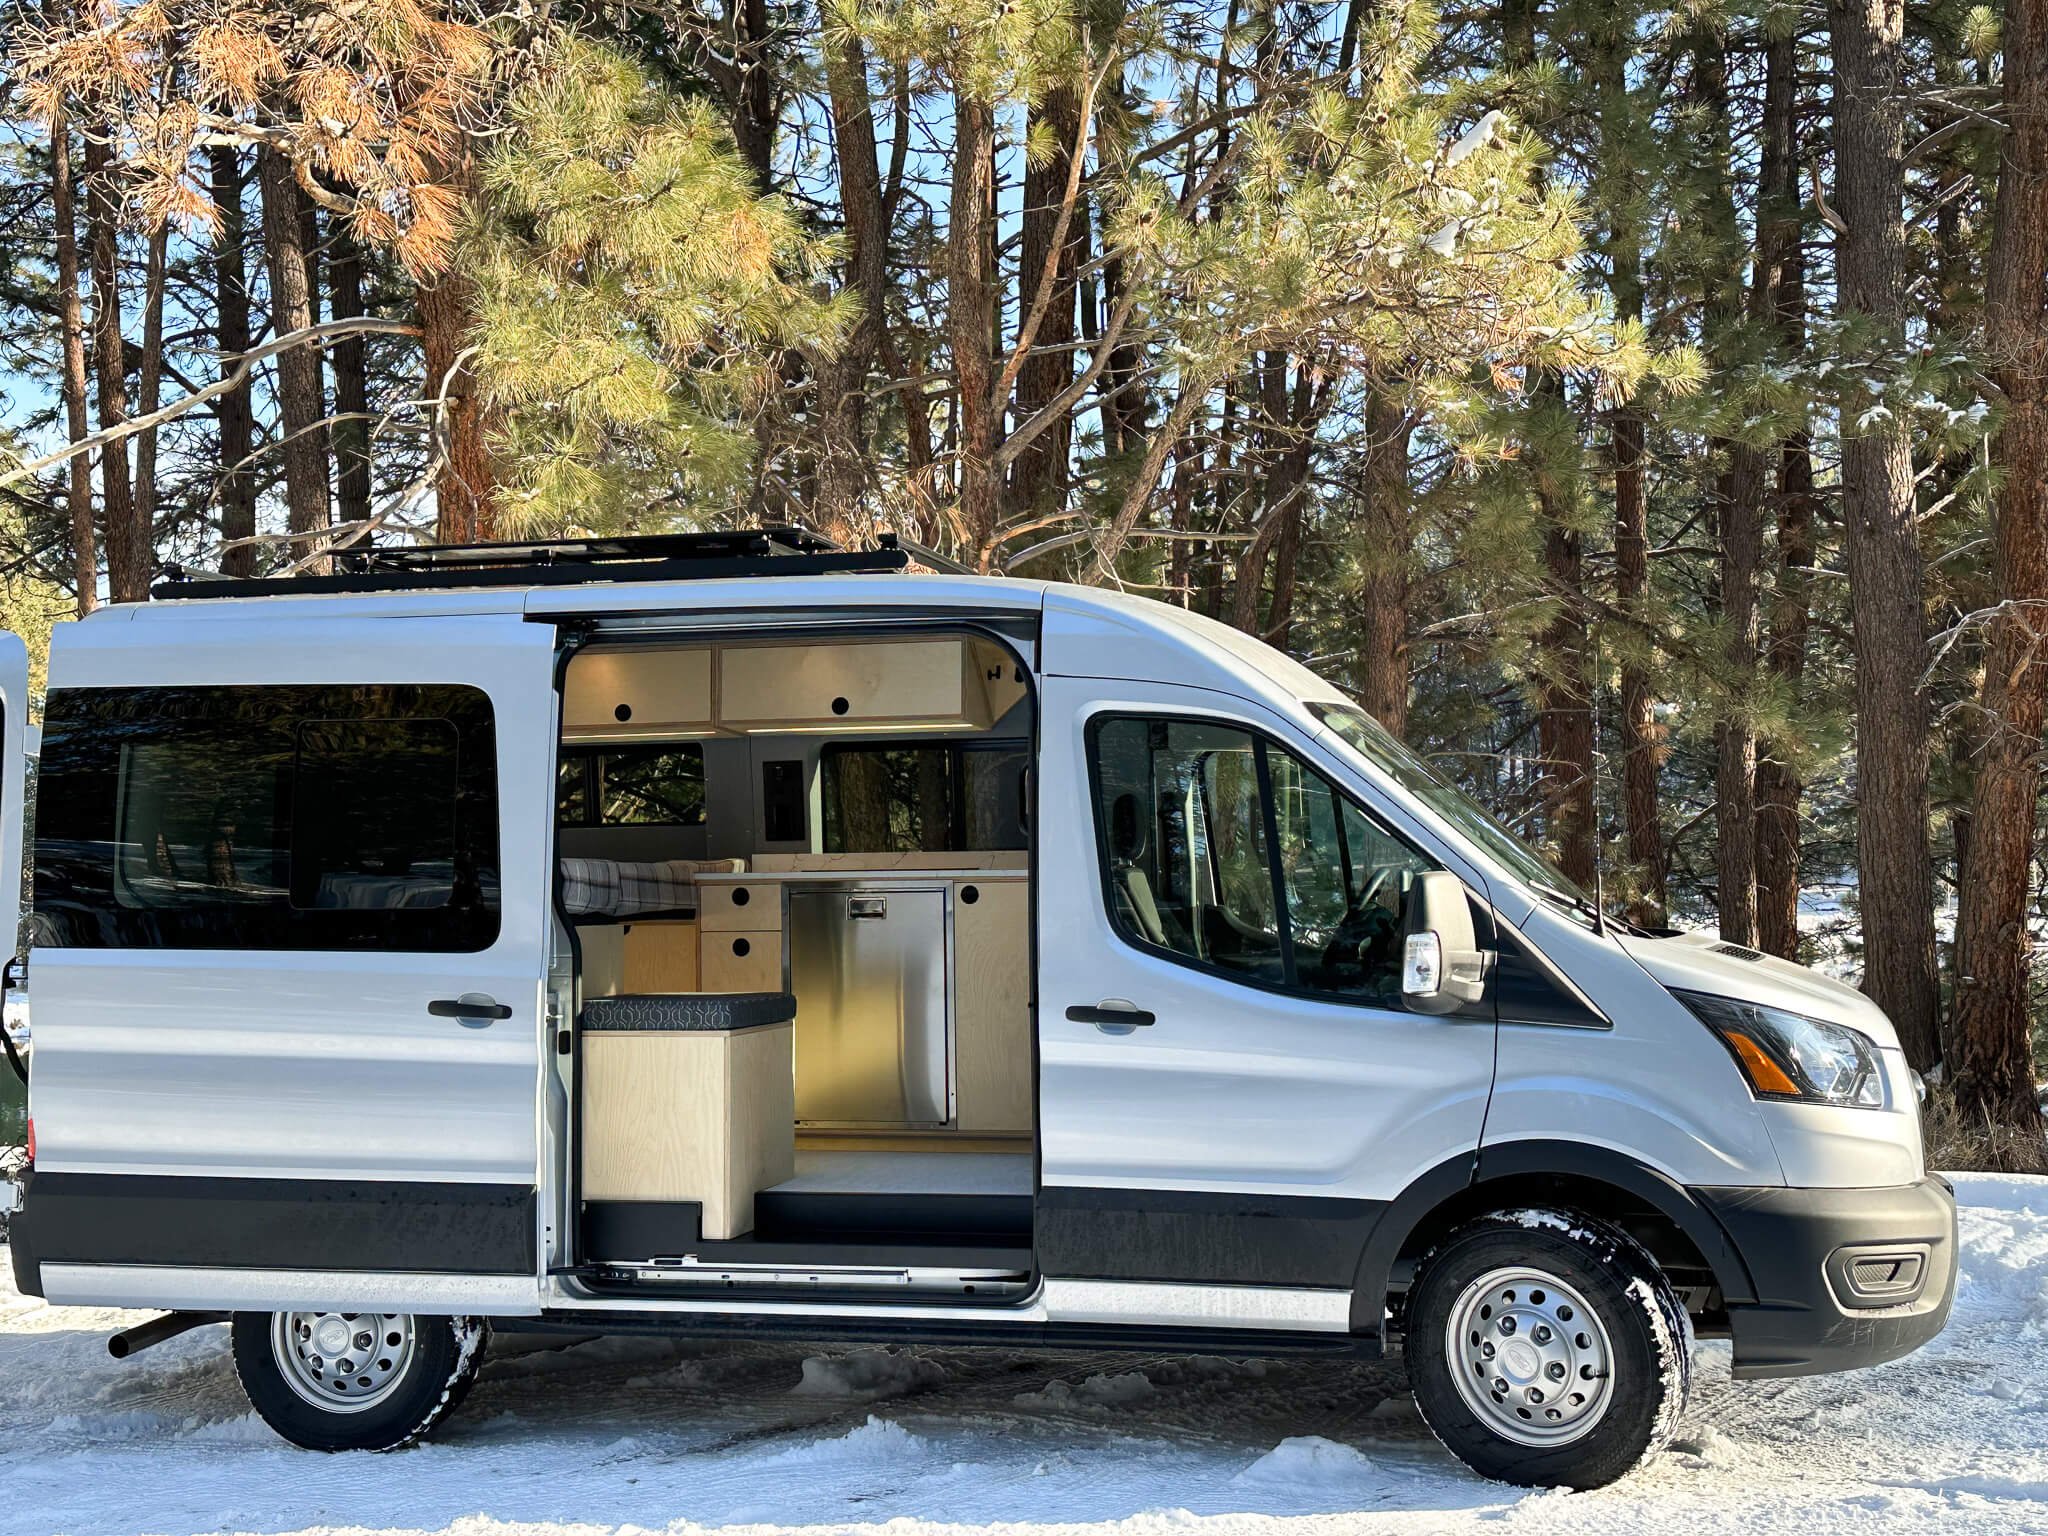 2021 Ford Transit Custom Build HZLVAN — How We Adventure